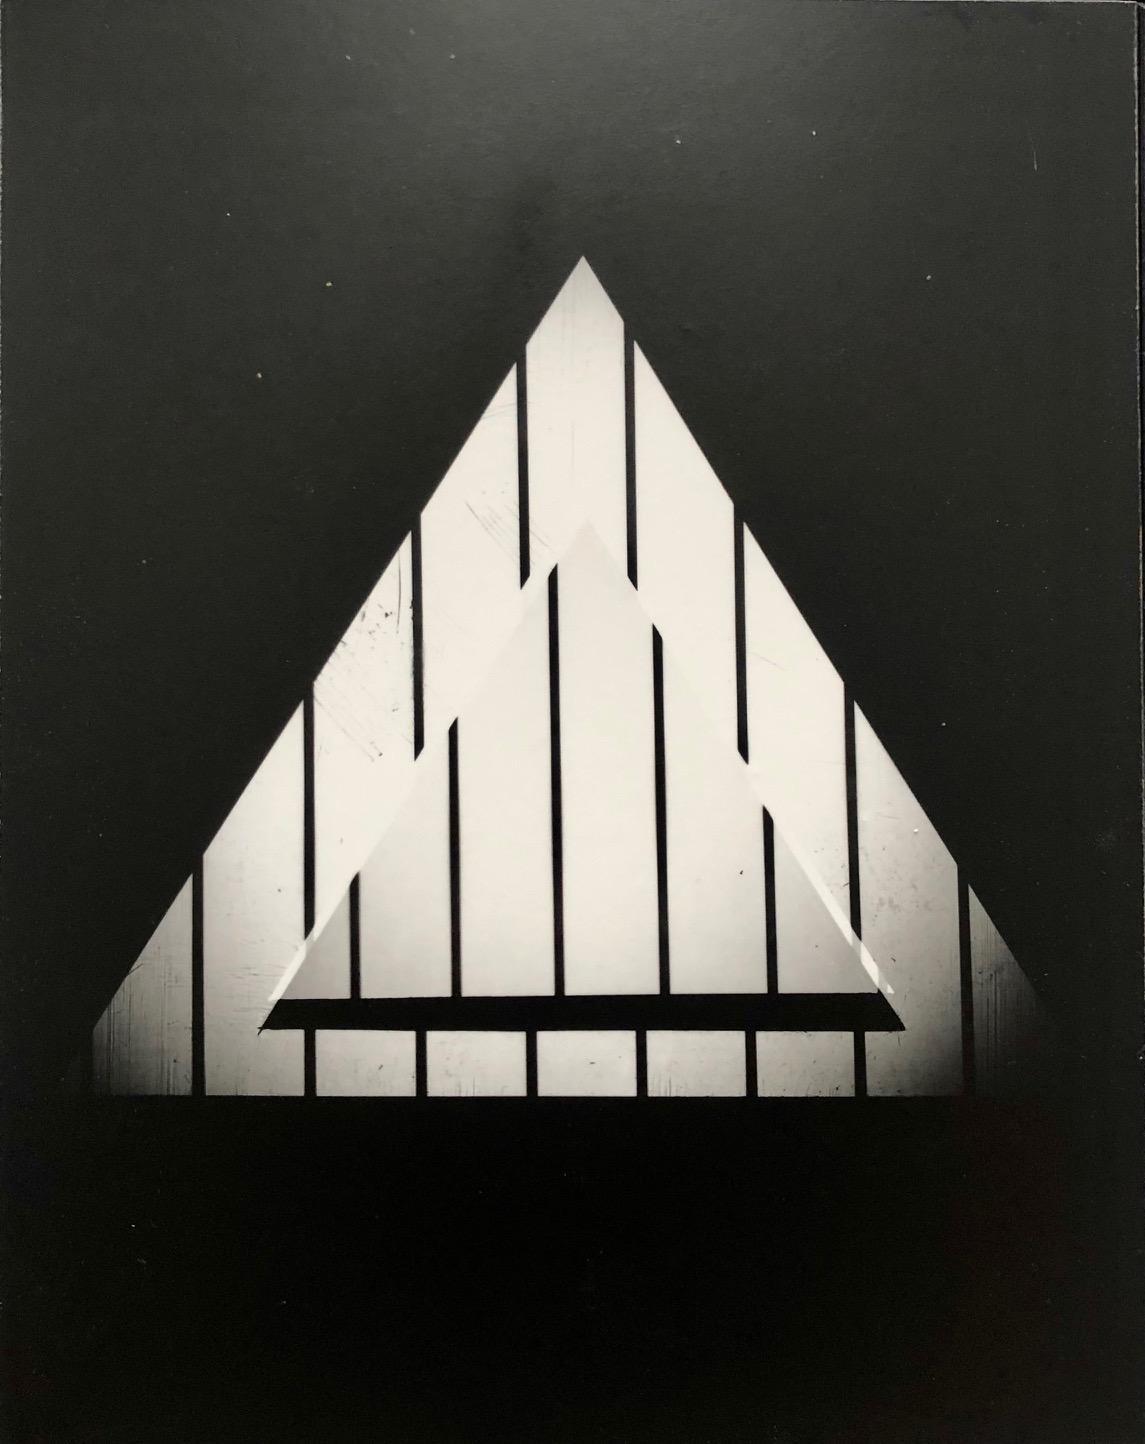 Juan Fernandez, Triangle Pinstripes (Positive), 2022, Laminated silver gelatin print mounted on masonite, 14” x 11” x 1”